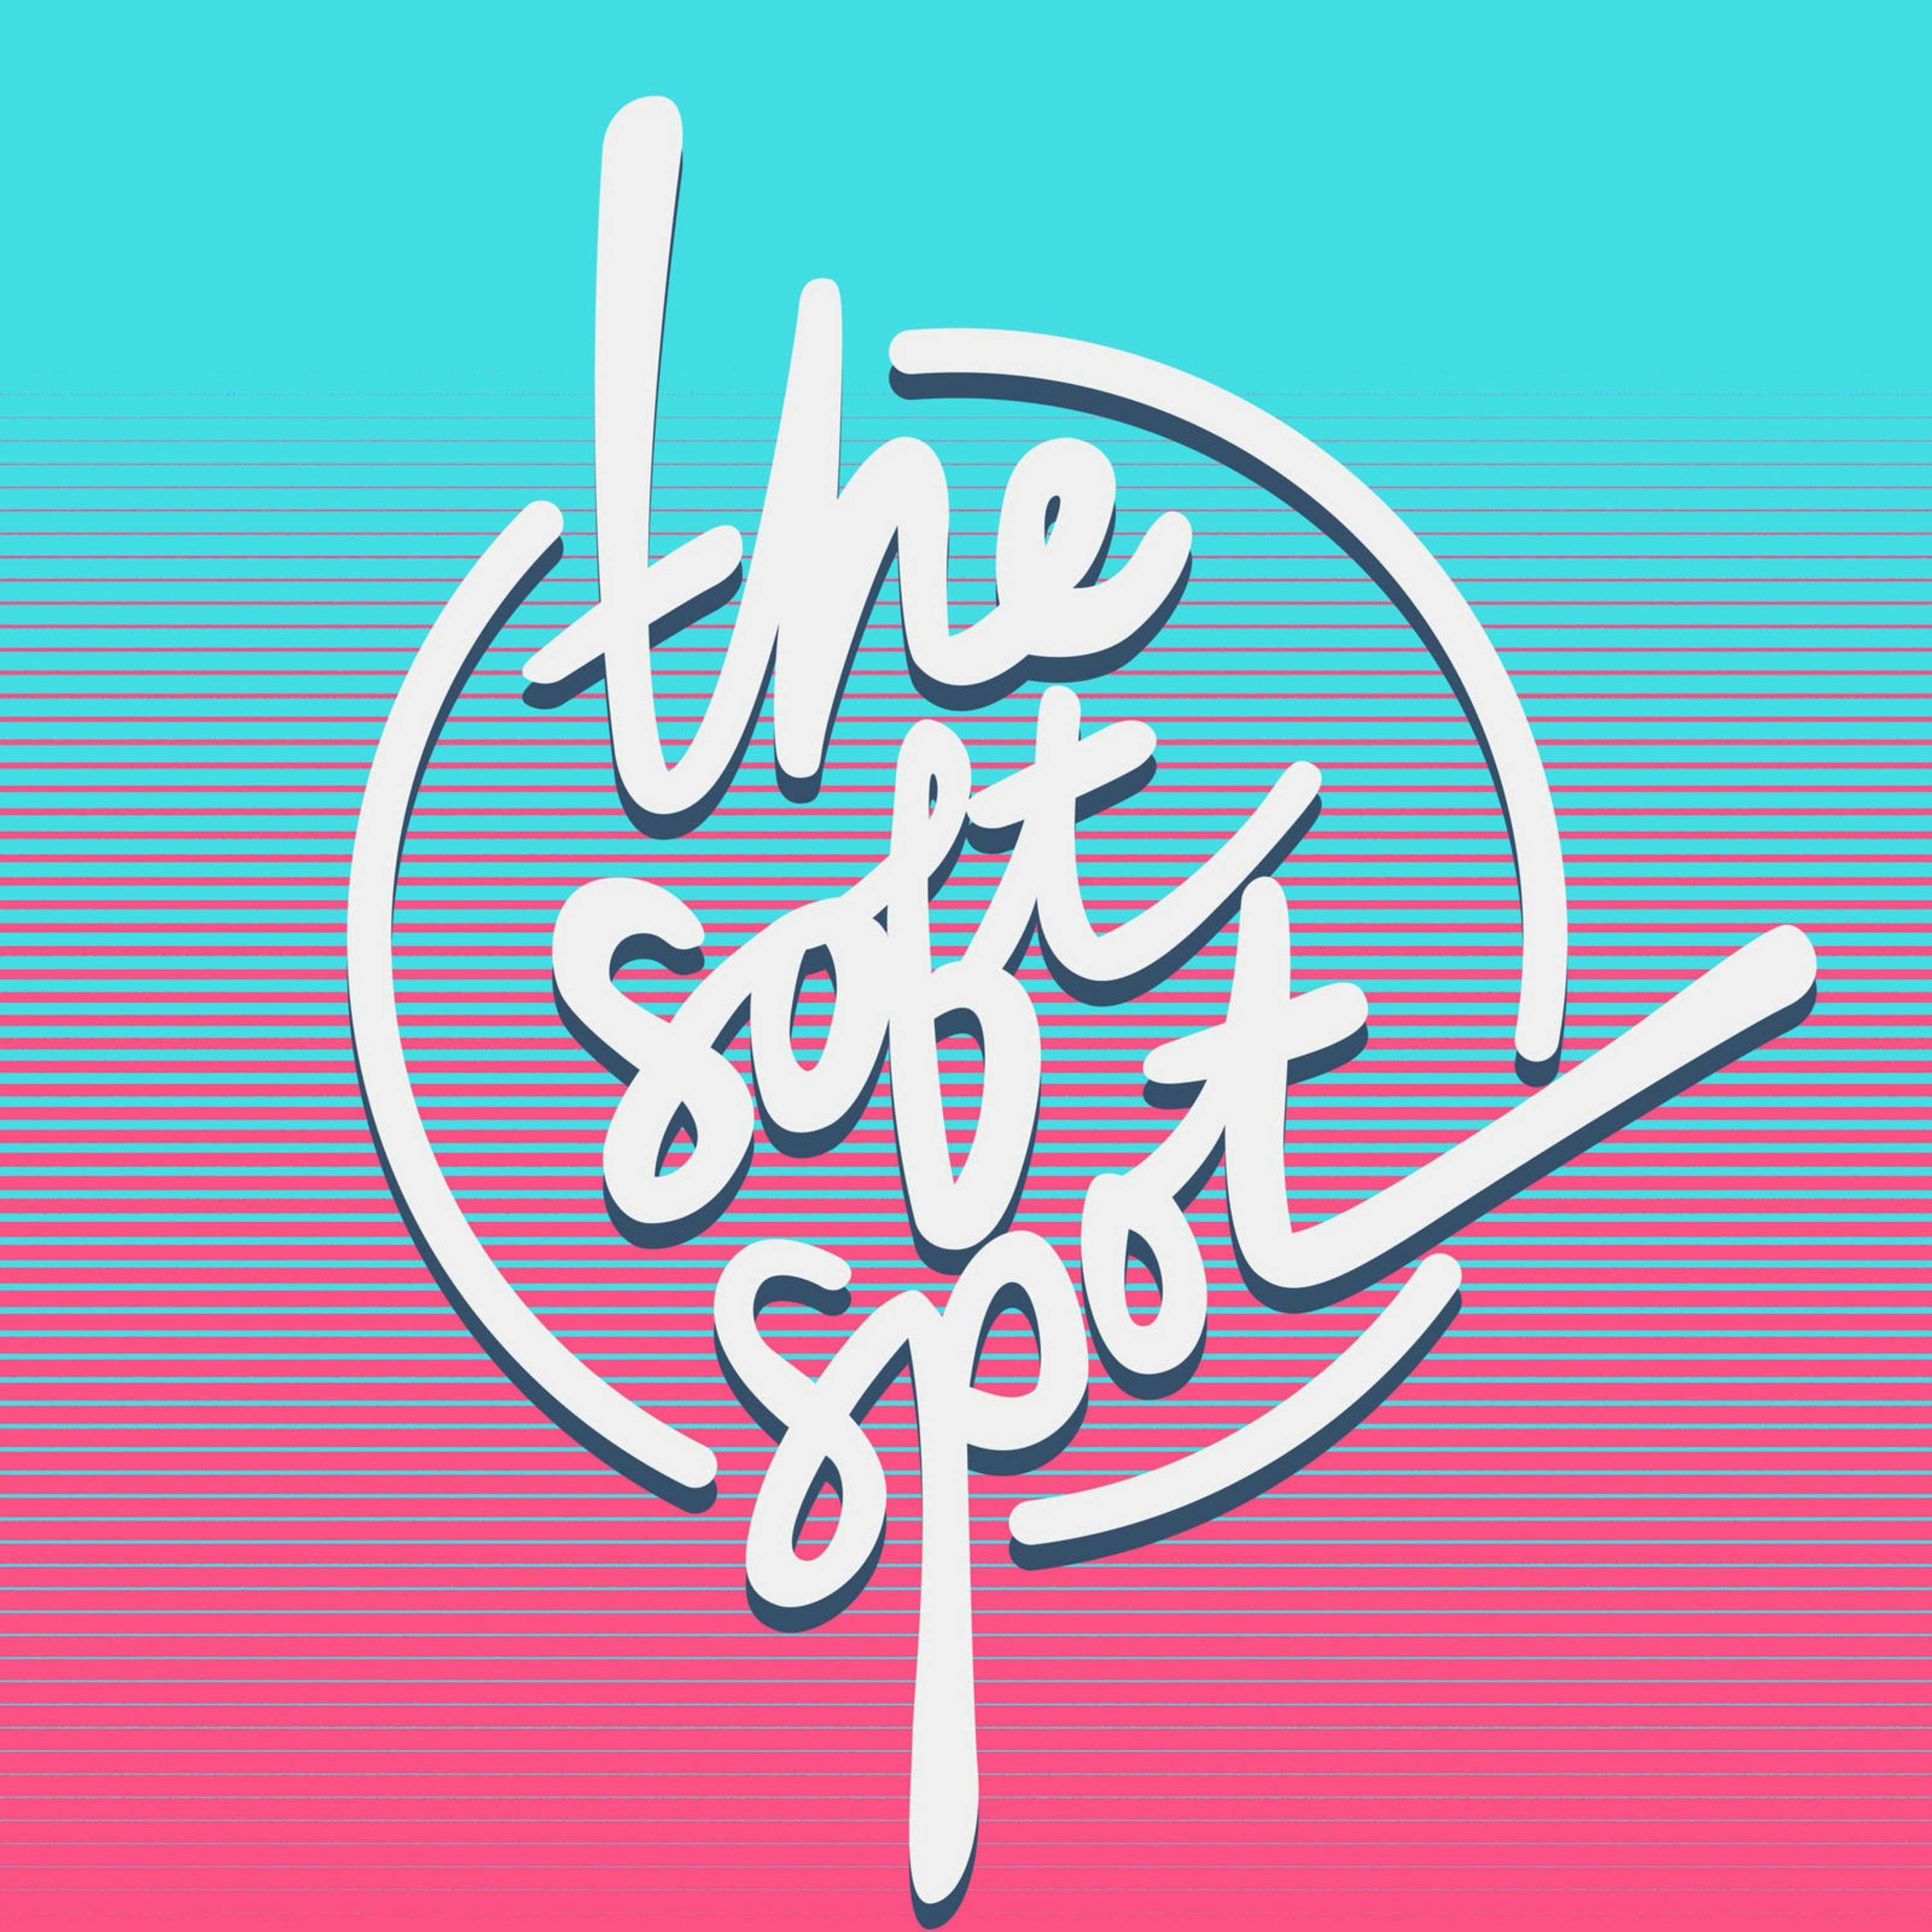 ”Hey Hey, We’re the Soft Spot!” (with Gareth Reynolds)